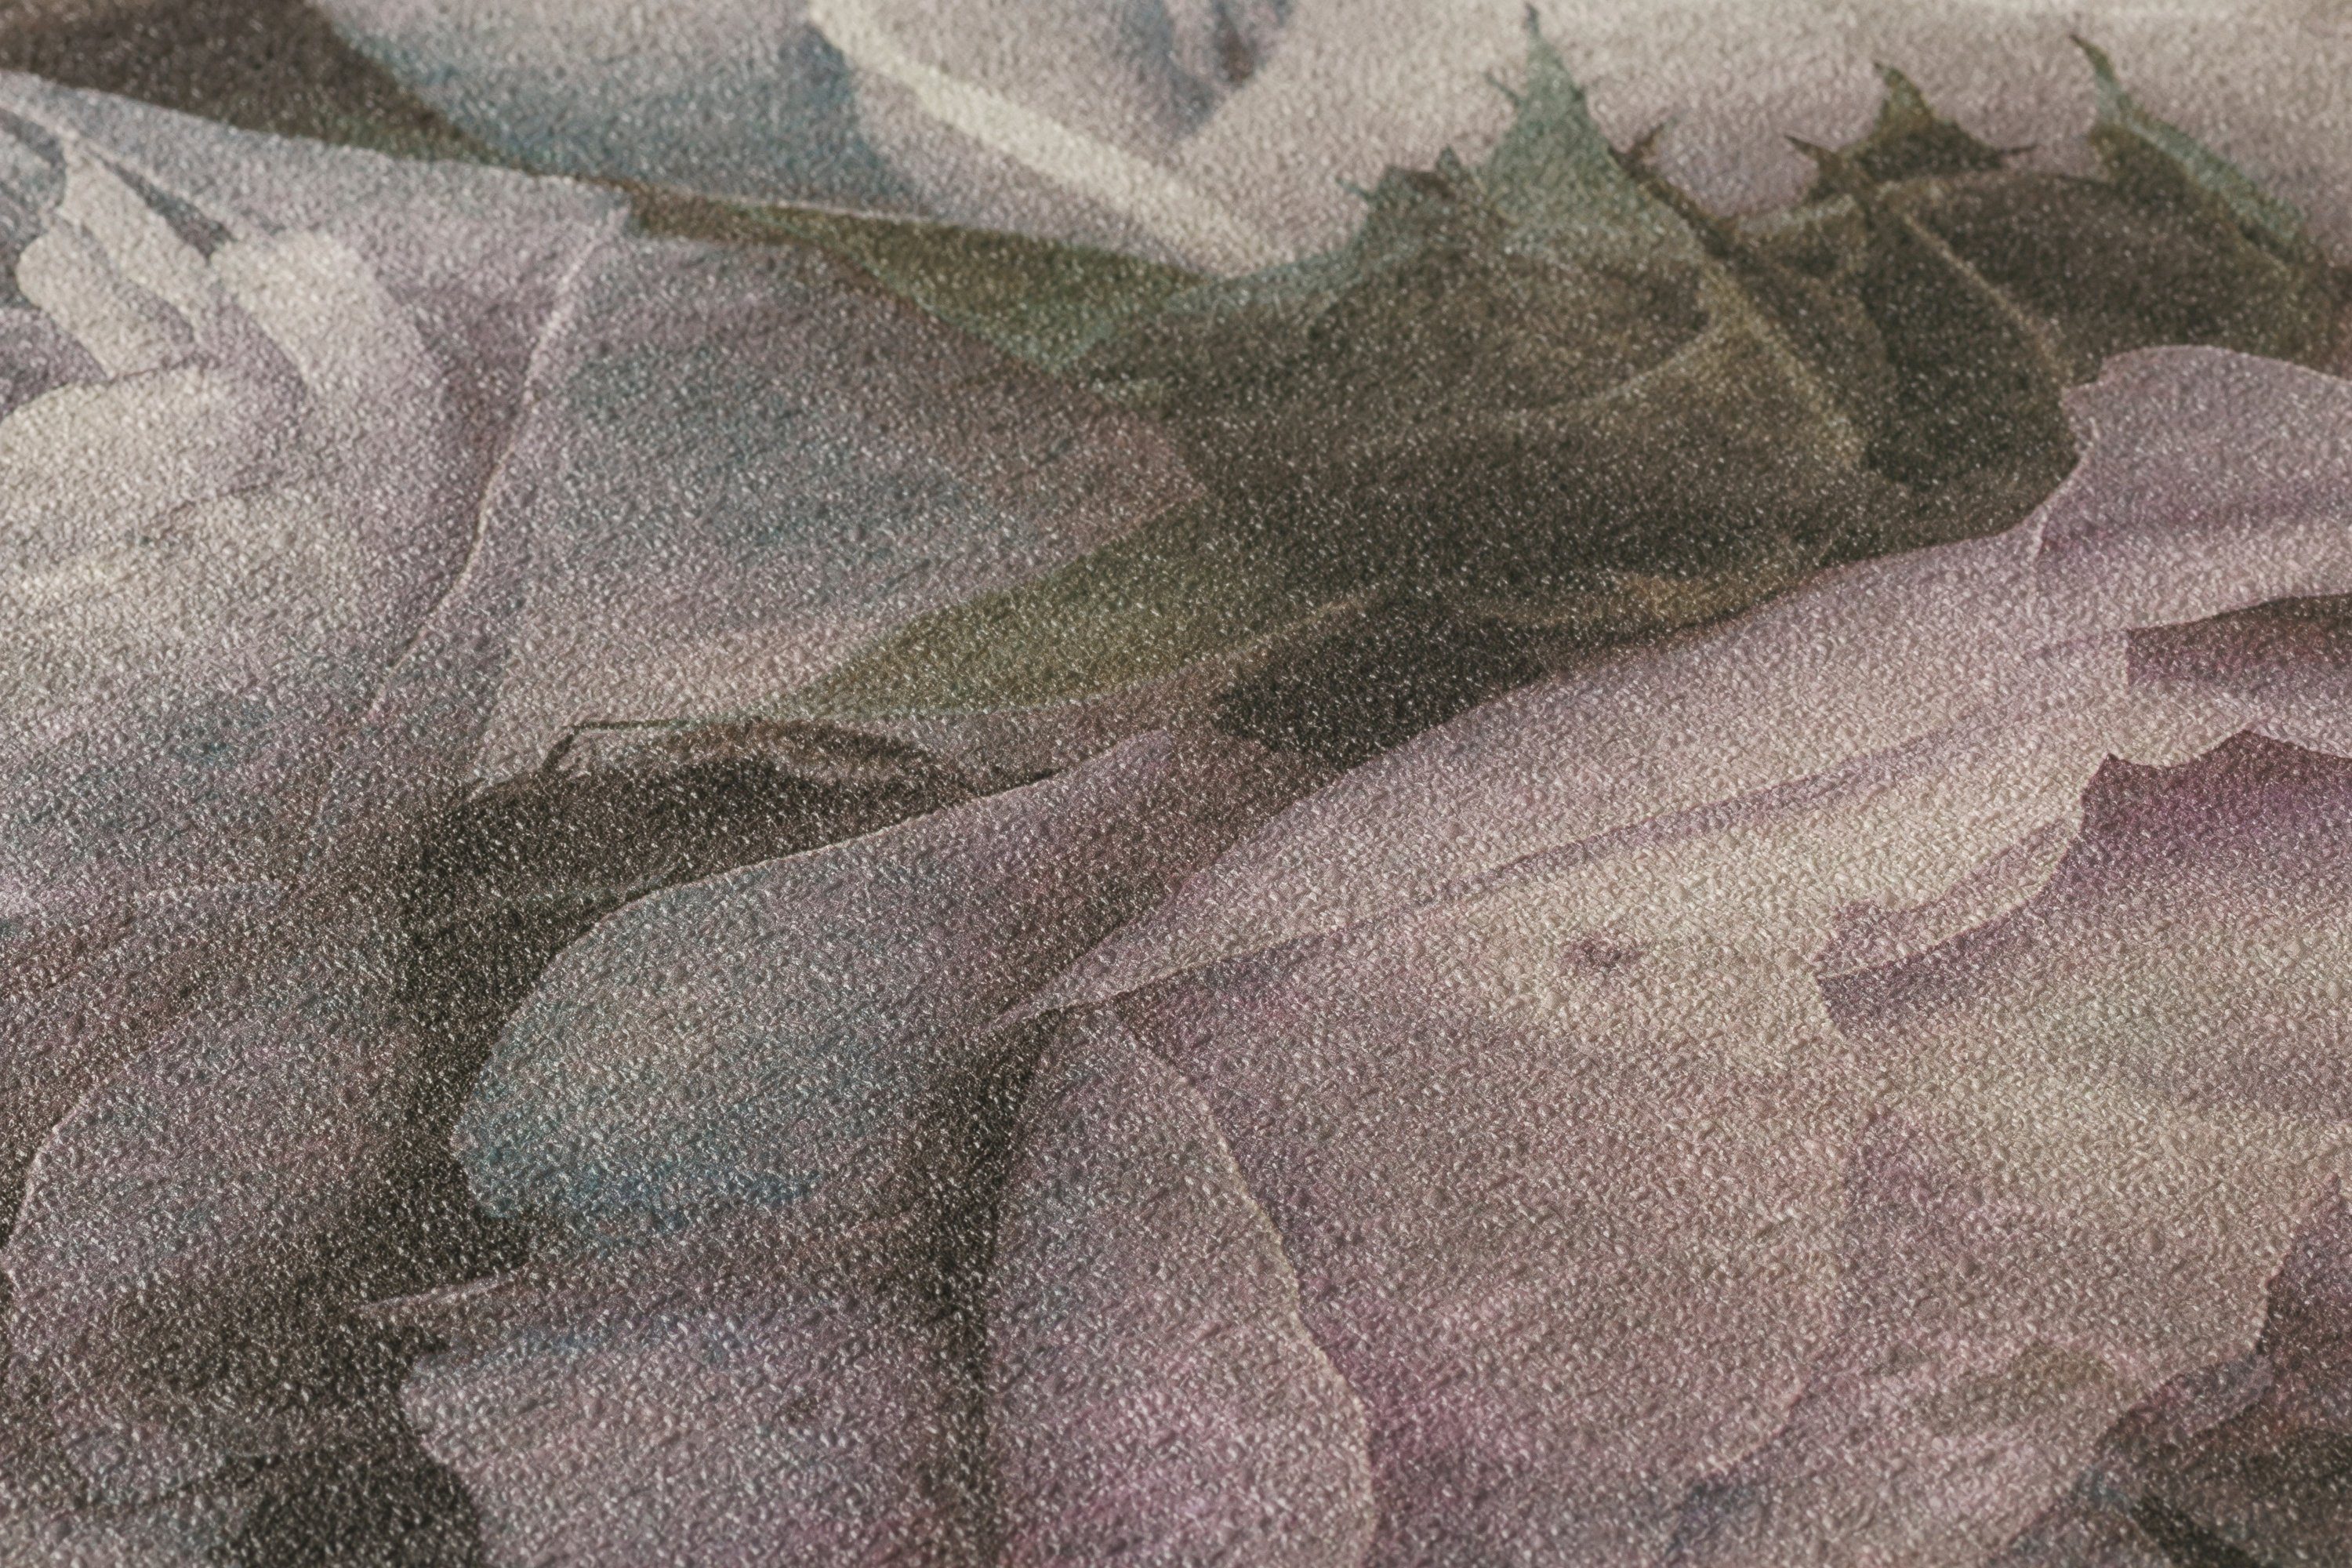 Vliestapete romantischen floral, Romantic mit lila/grau Walls Création Rosen, A.S. Tapete living Dream Blumen walls New